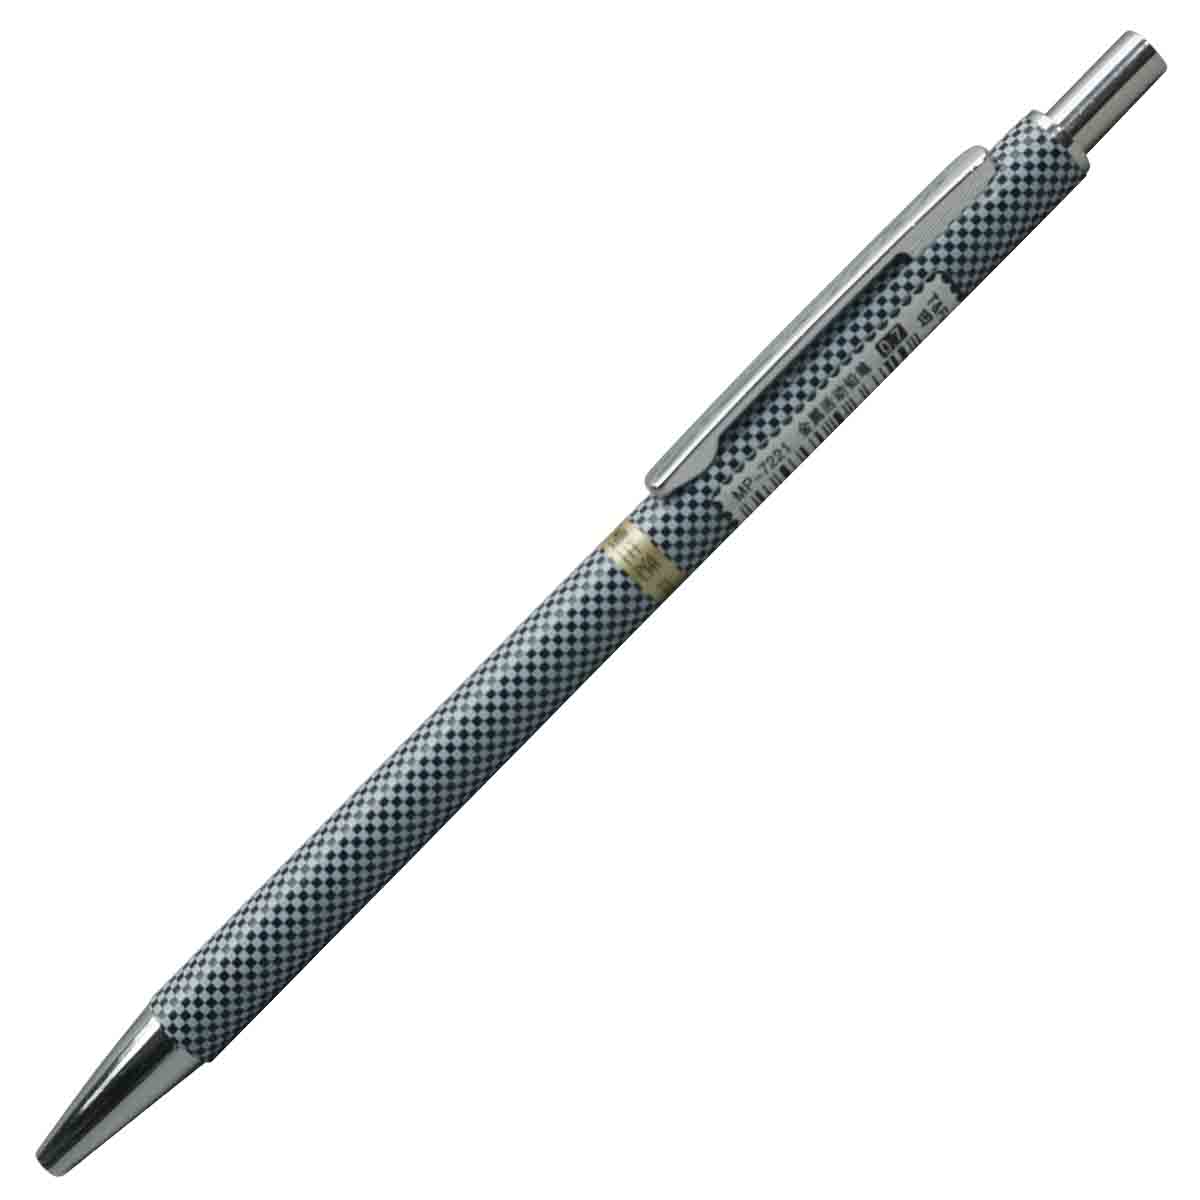 Luoshi 0.7mm Mechanical Pencil SKU 50029